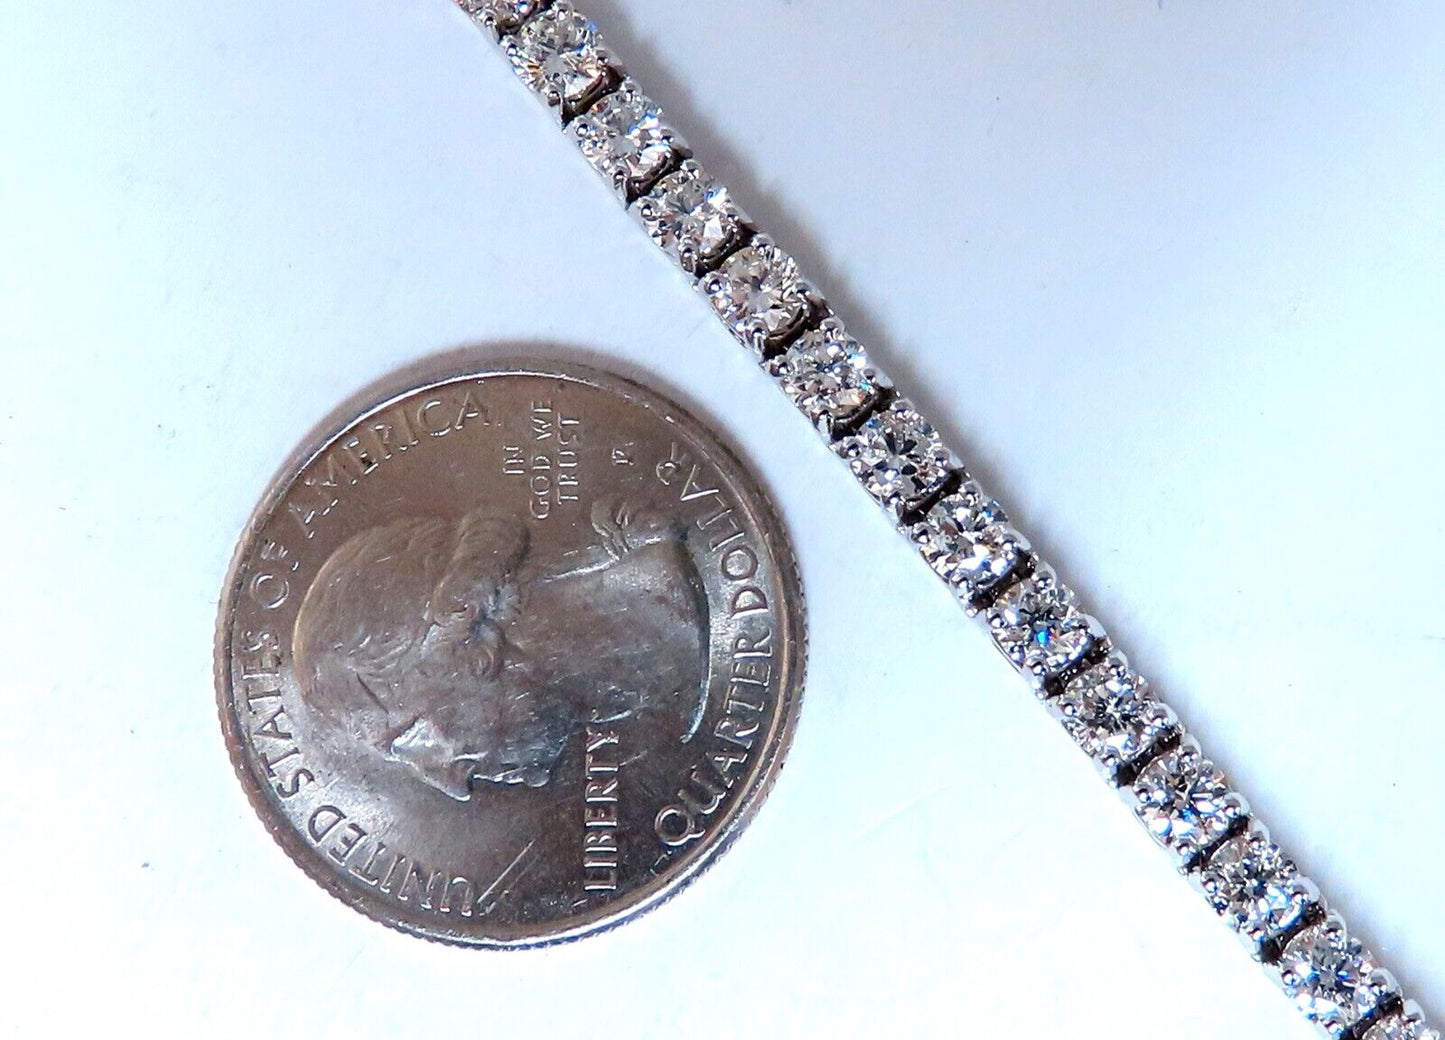 Tennis Bracelet 7.70ct Natural Round Diamonds 14kt